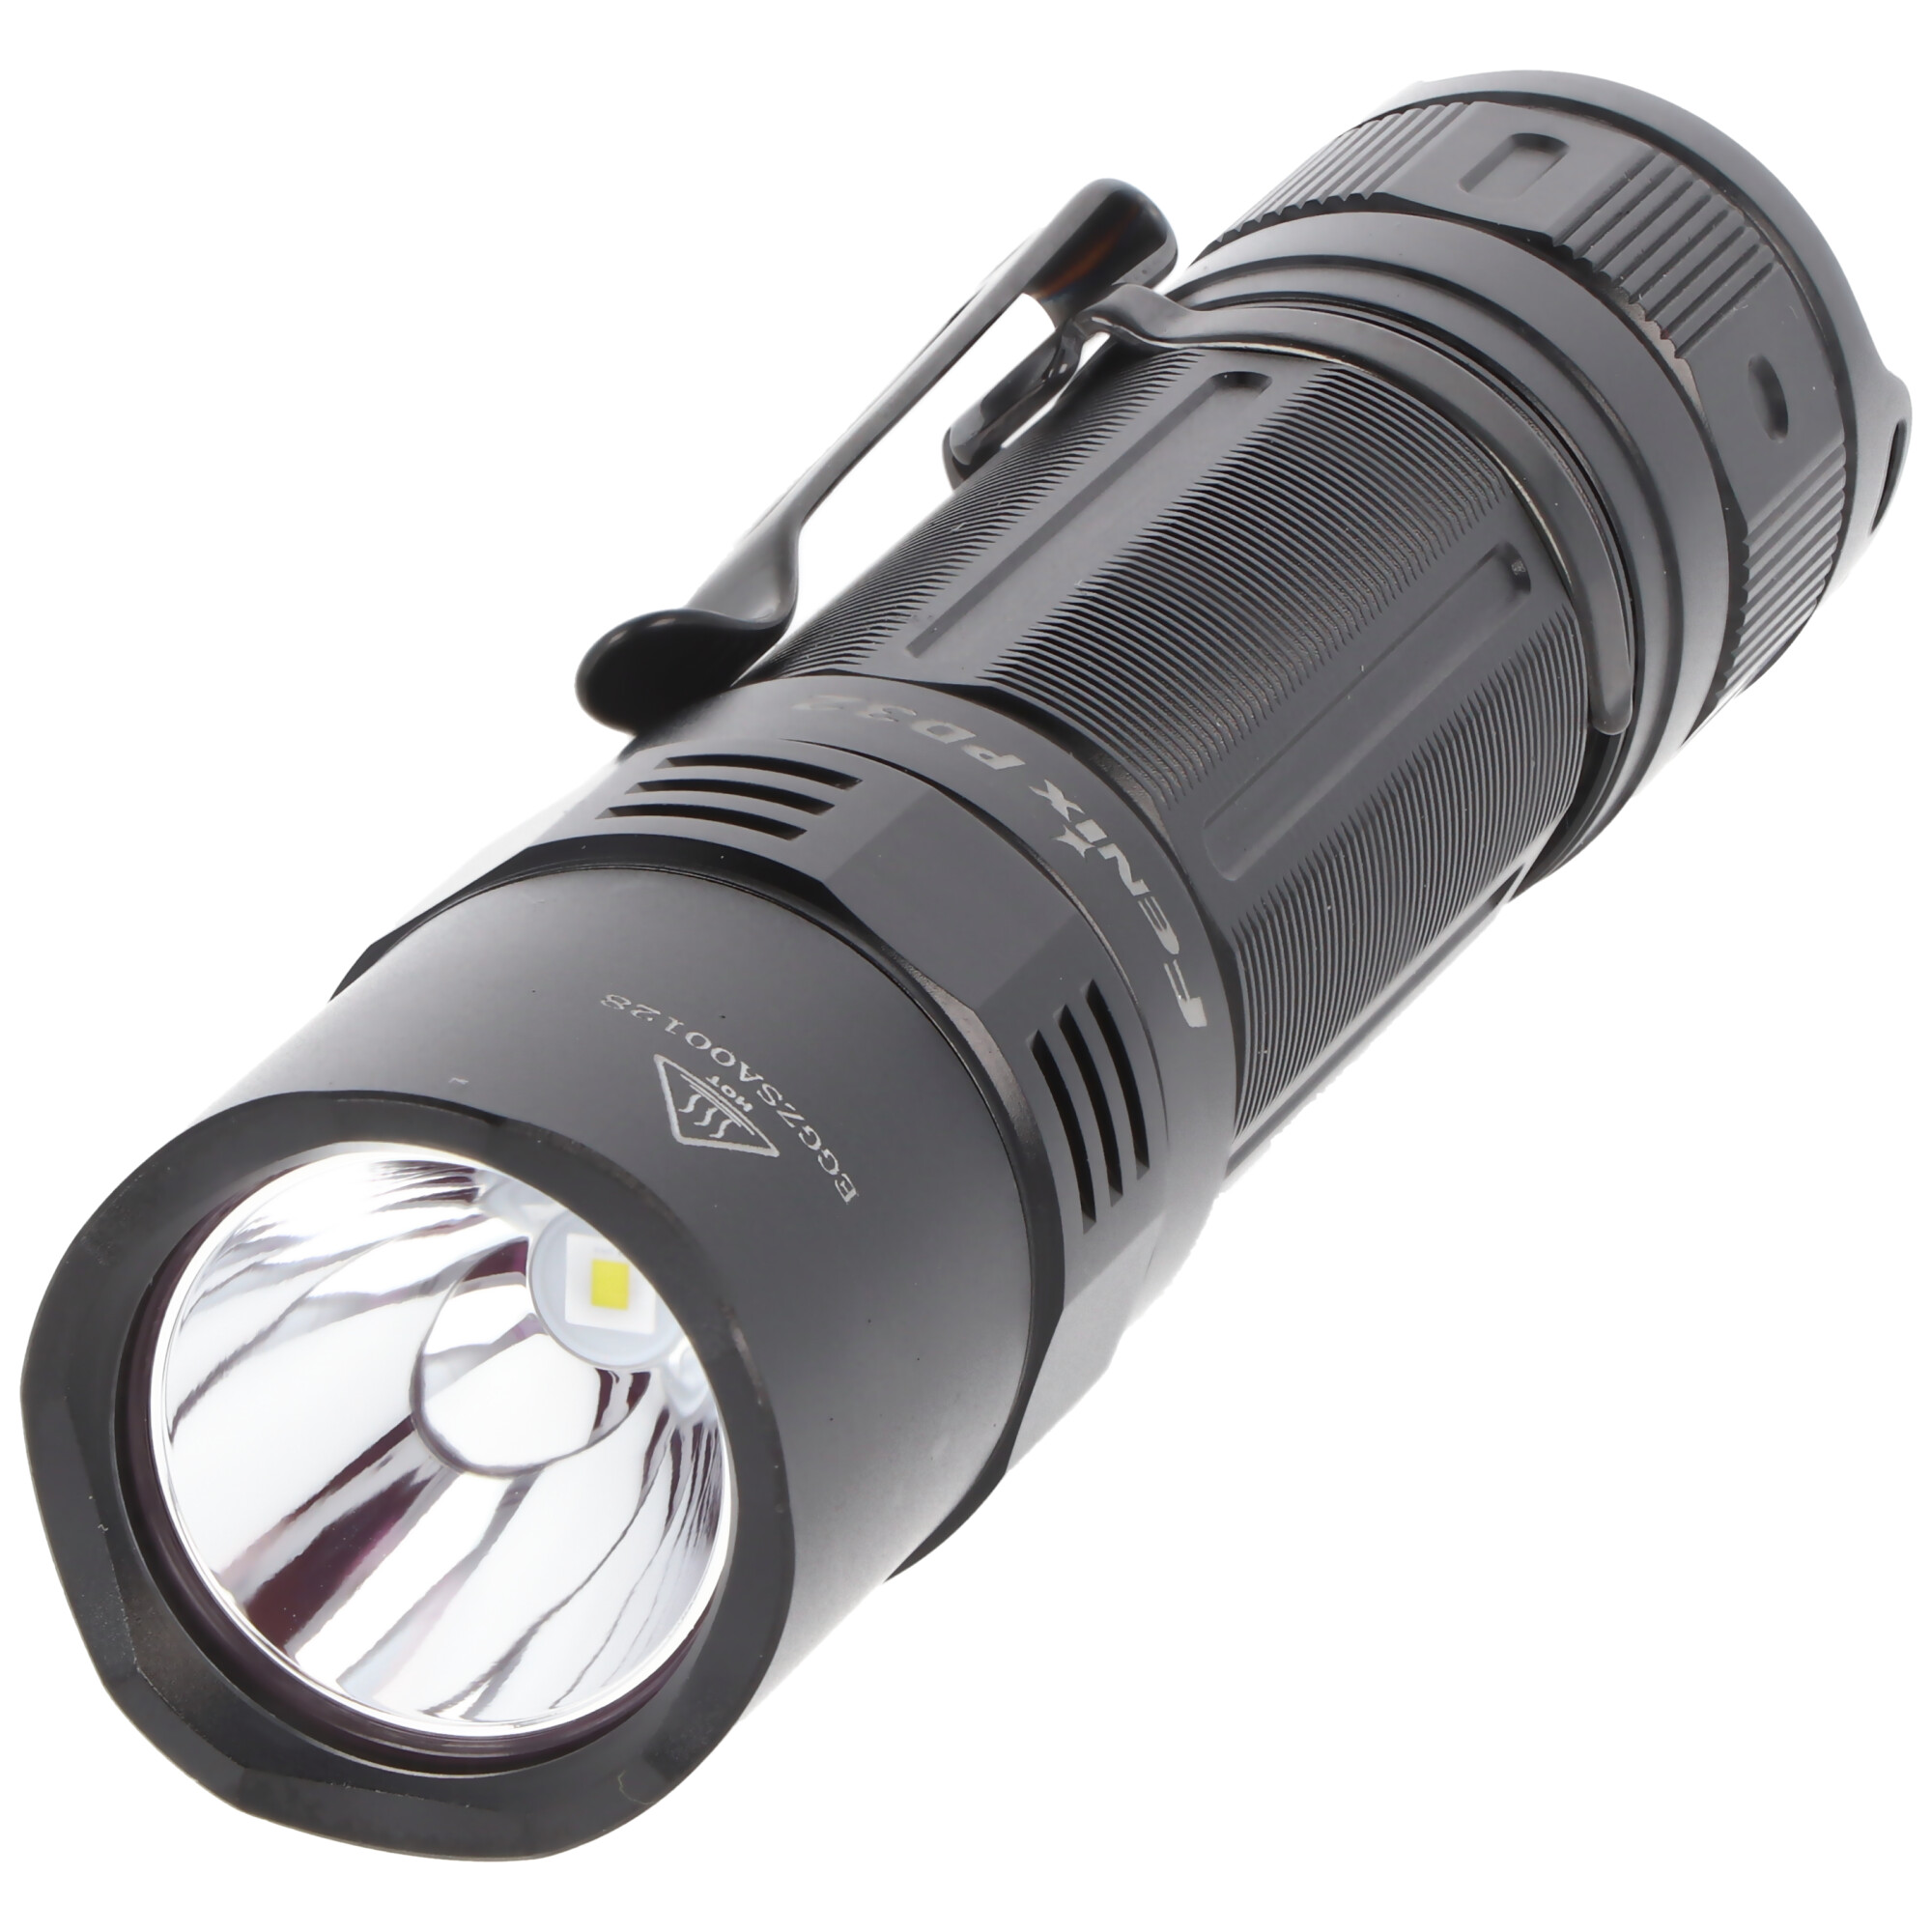 Fenix PD32 V2.0 Cree XP-L HI LED Taschenlampe mit bis zu 900 Lumen, ohne Akku